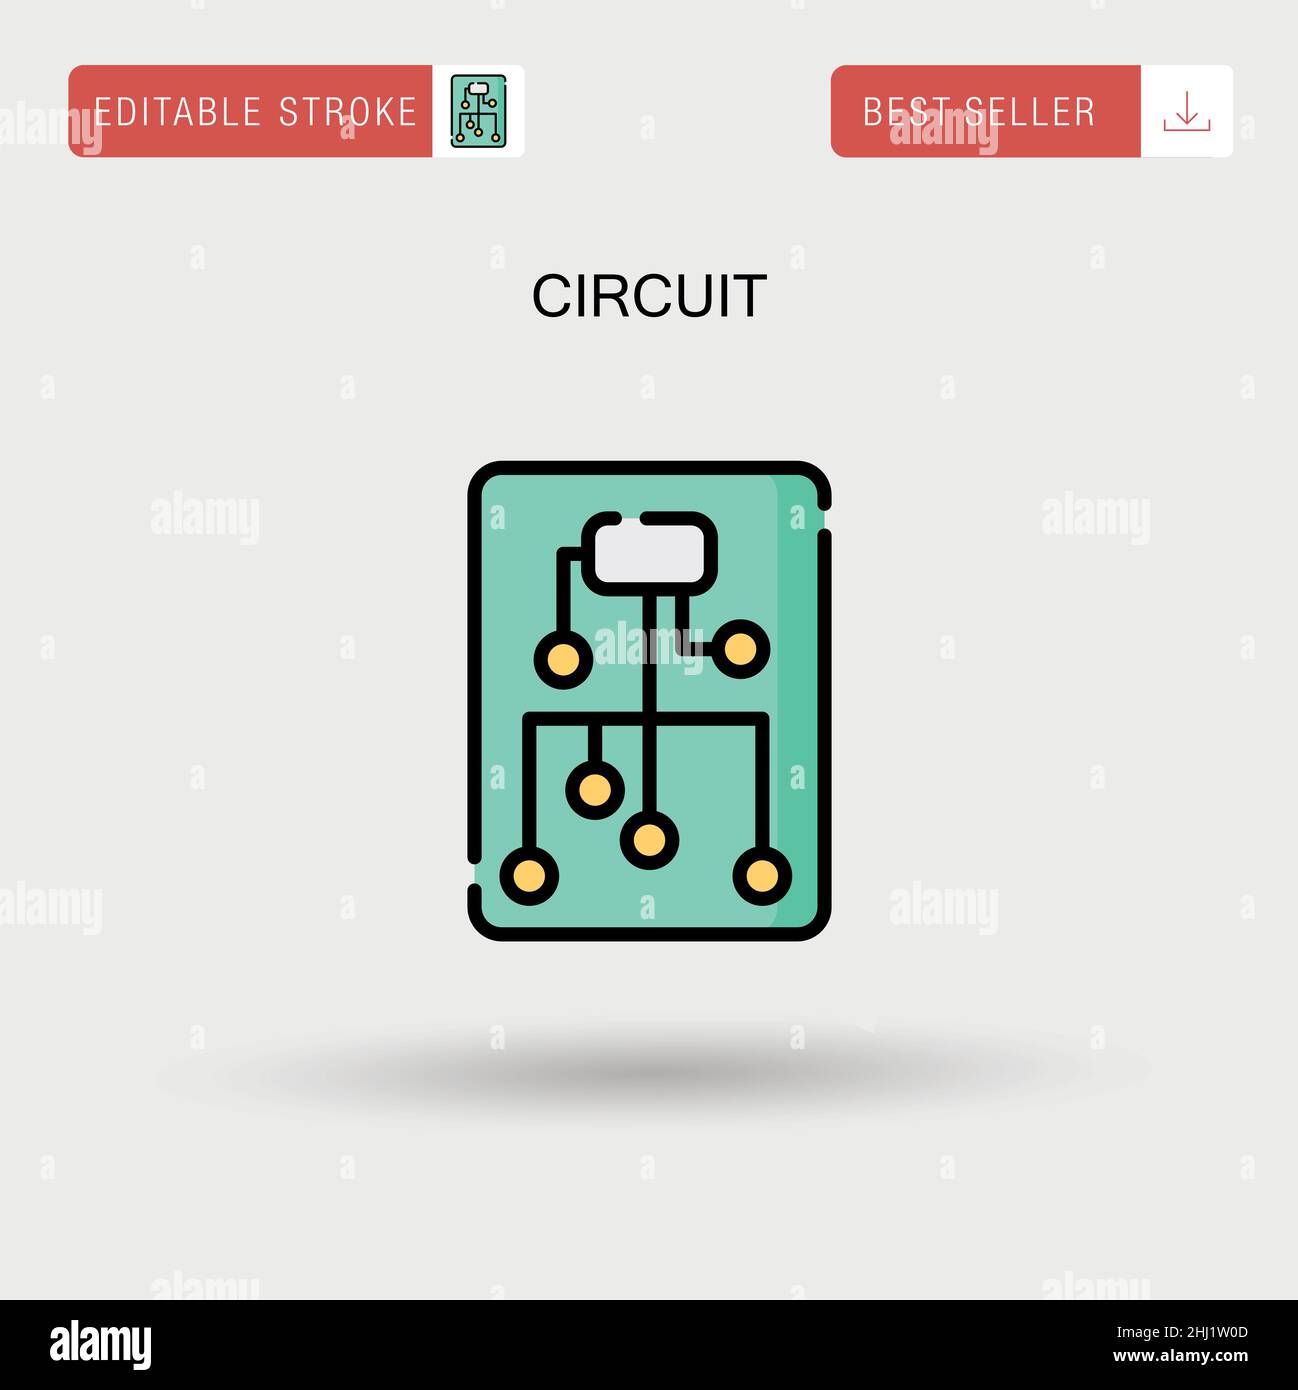 Circuit Simple vector icon. Stock Vector